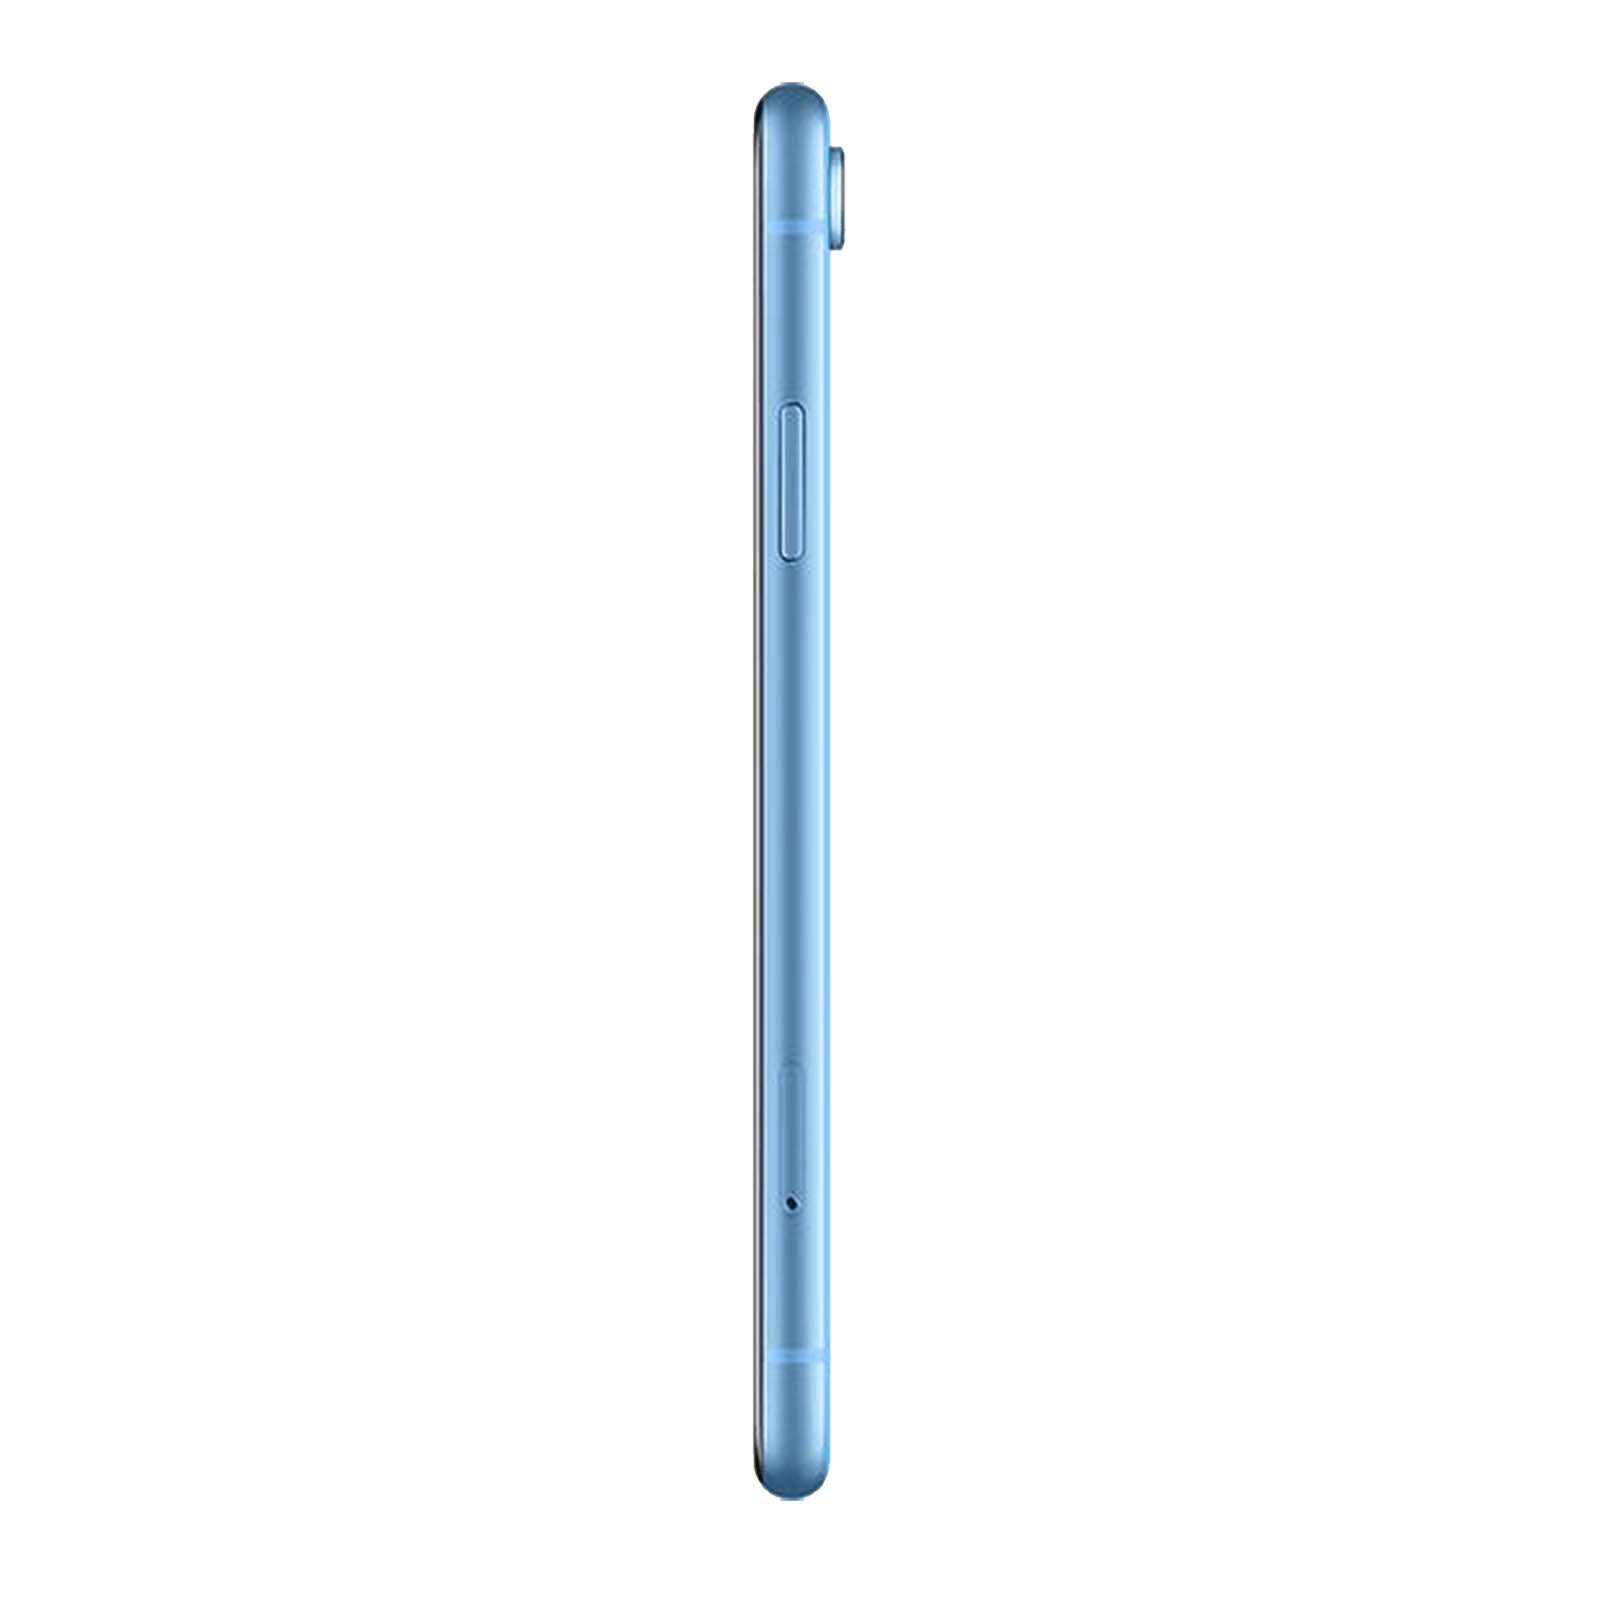 Apple iPhone XR 256GB Blue Fair - Unlocked